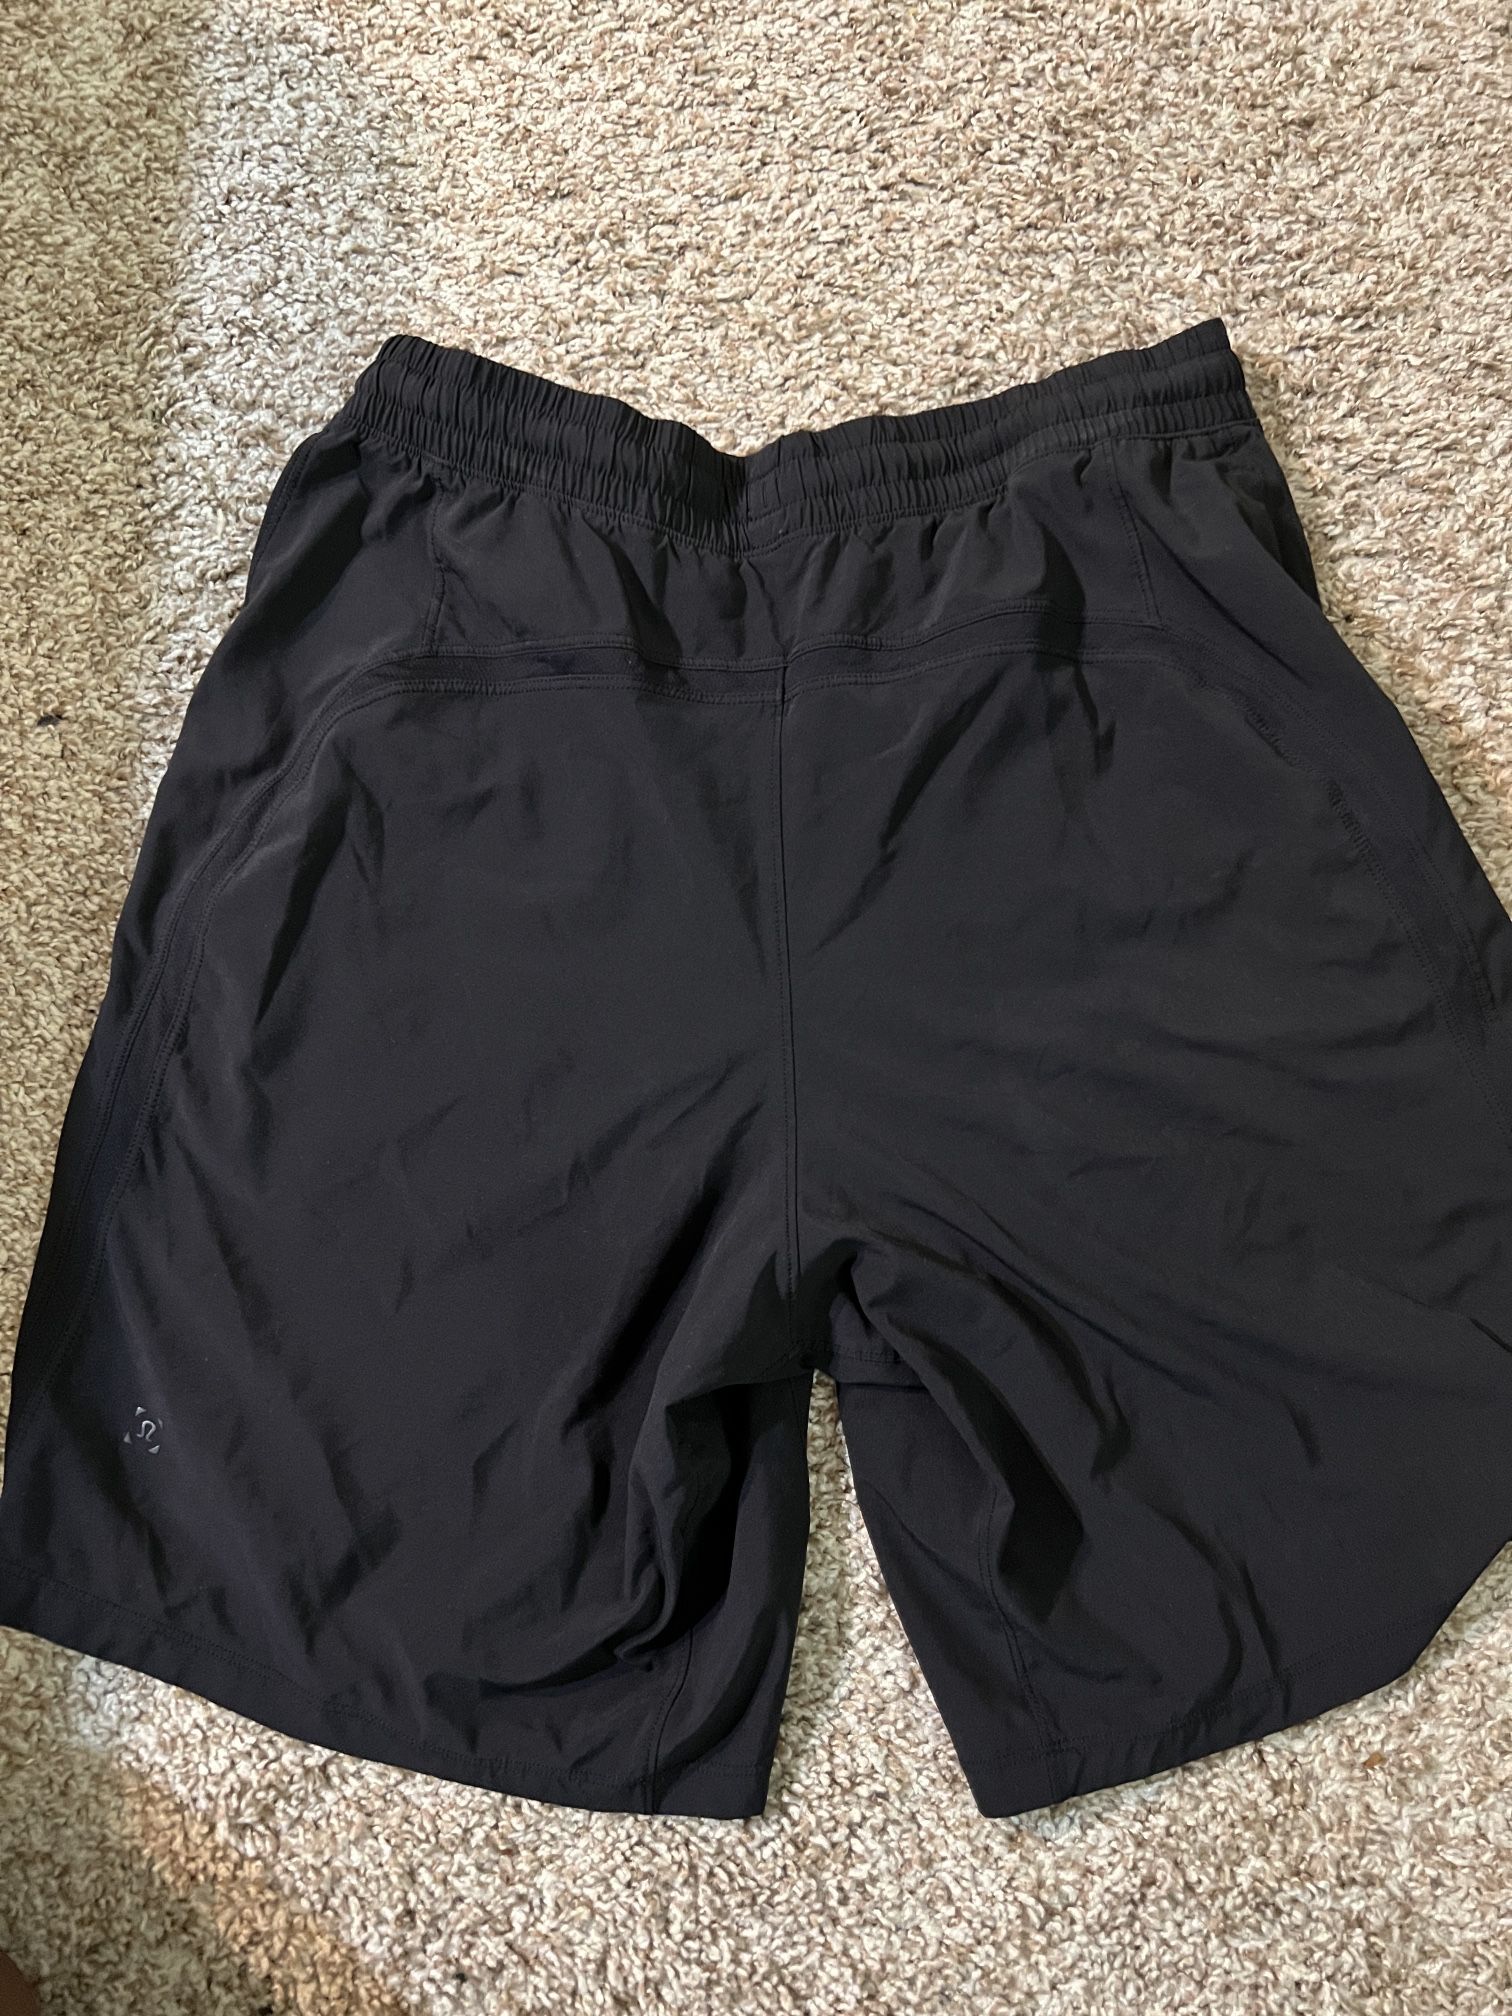 Lululemon Pace breaker shorts. Medium - Black